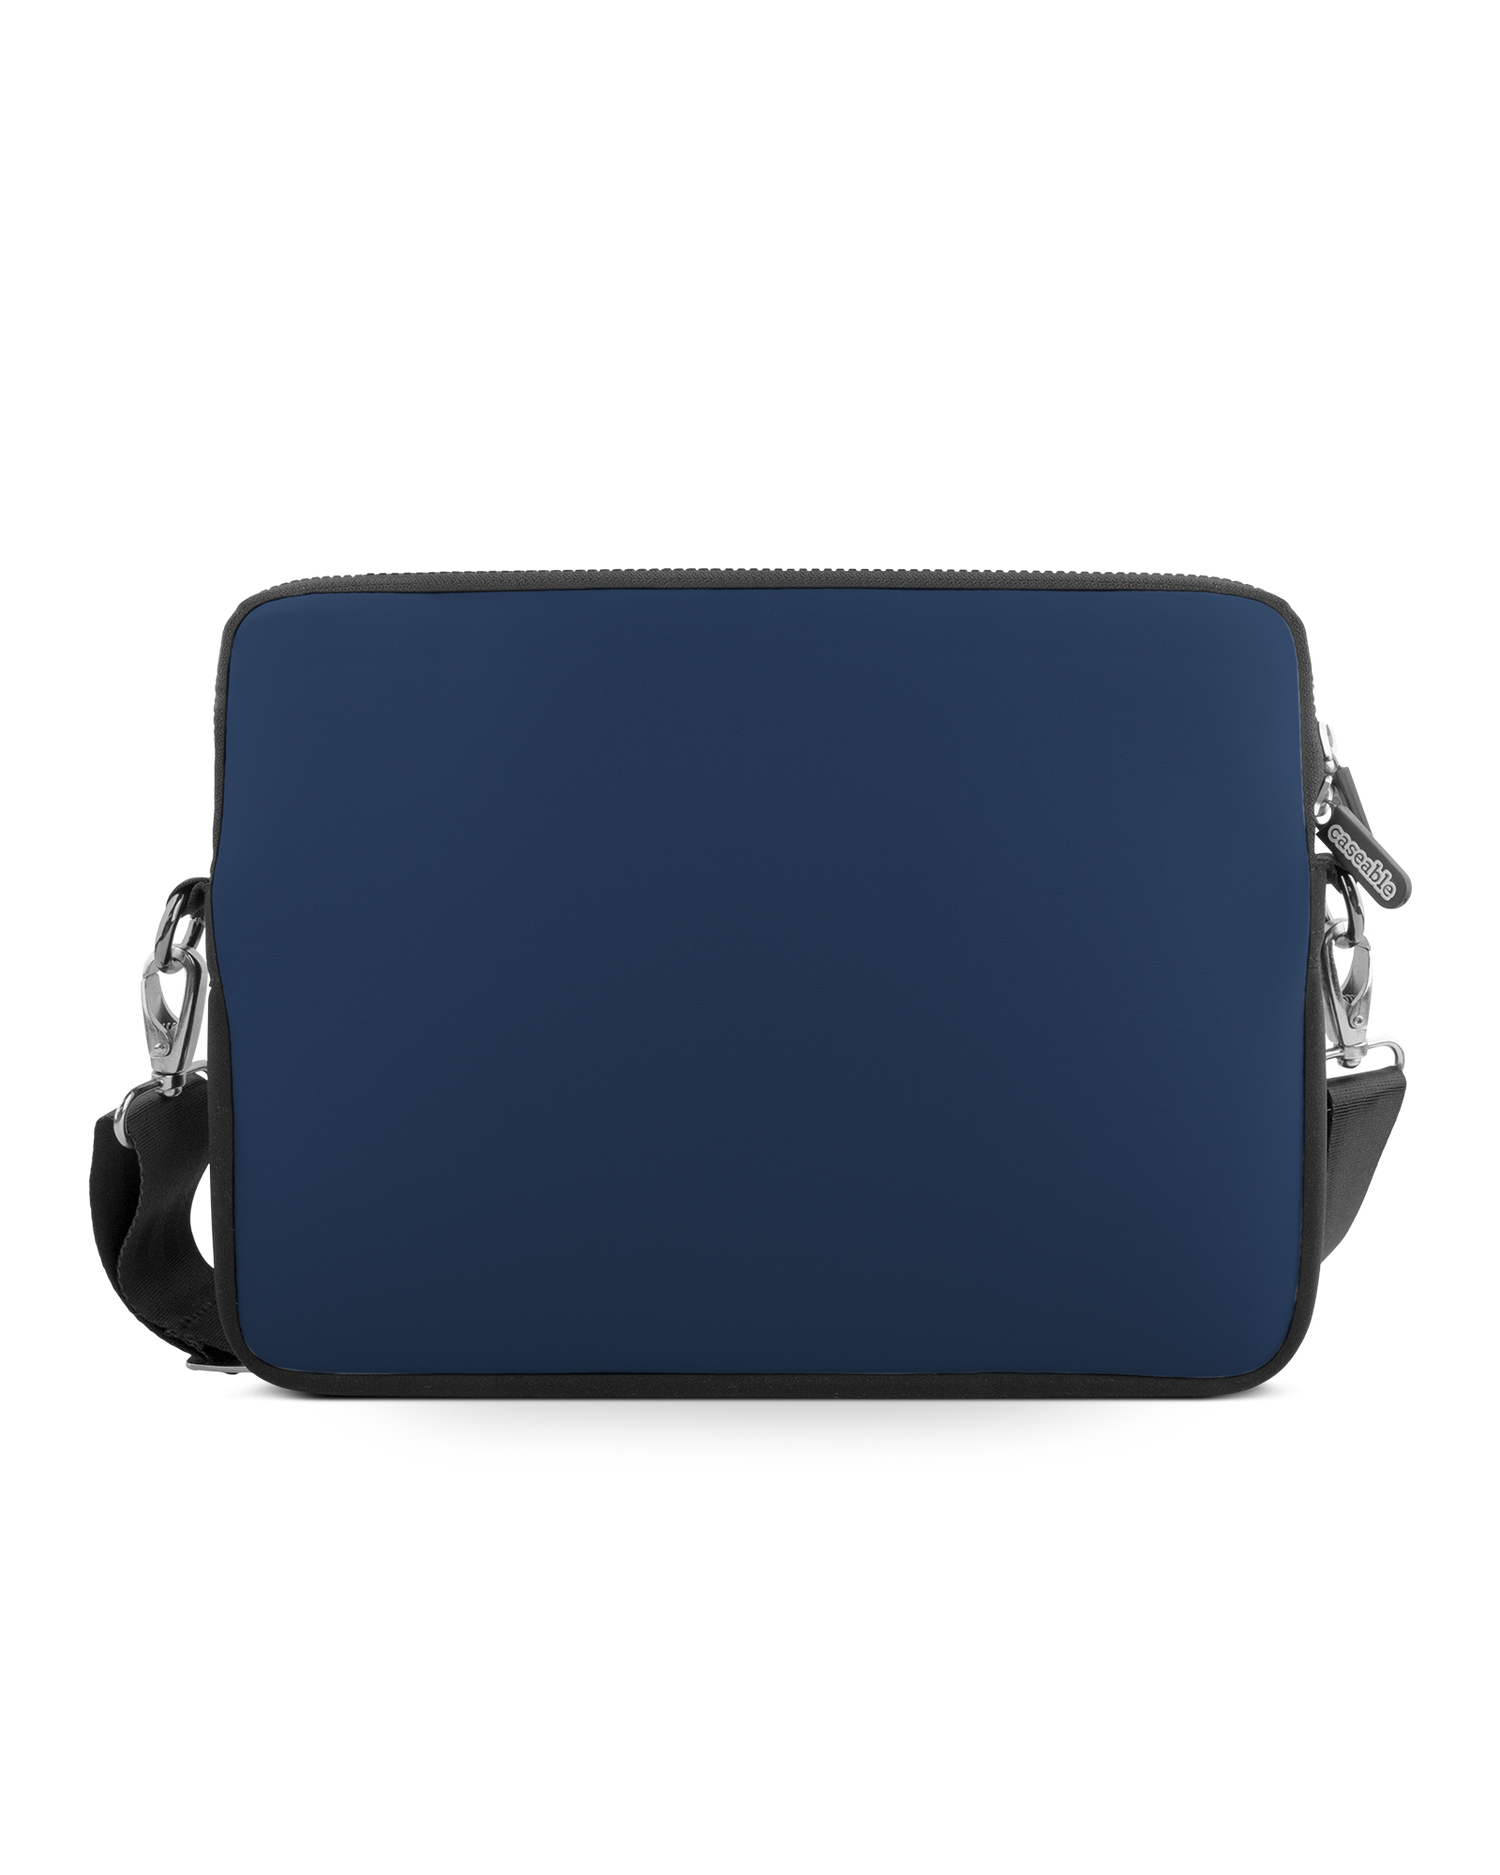 NAVY Premium Laptop Bag 17 inch: Front View